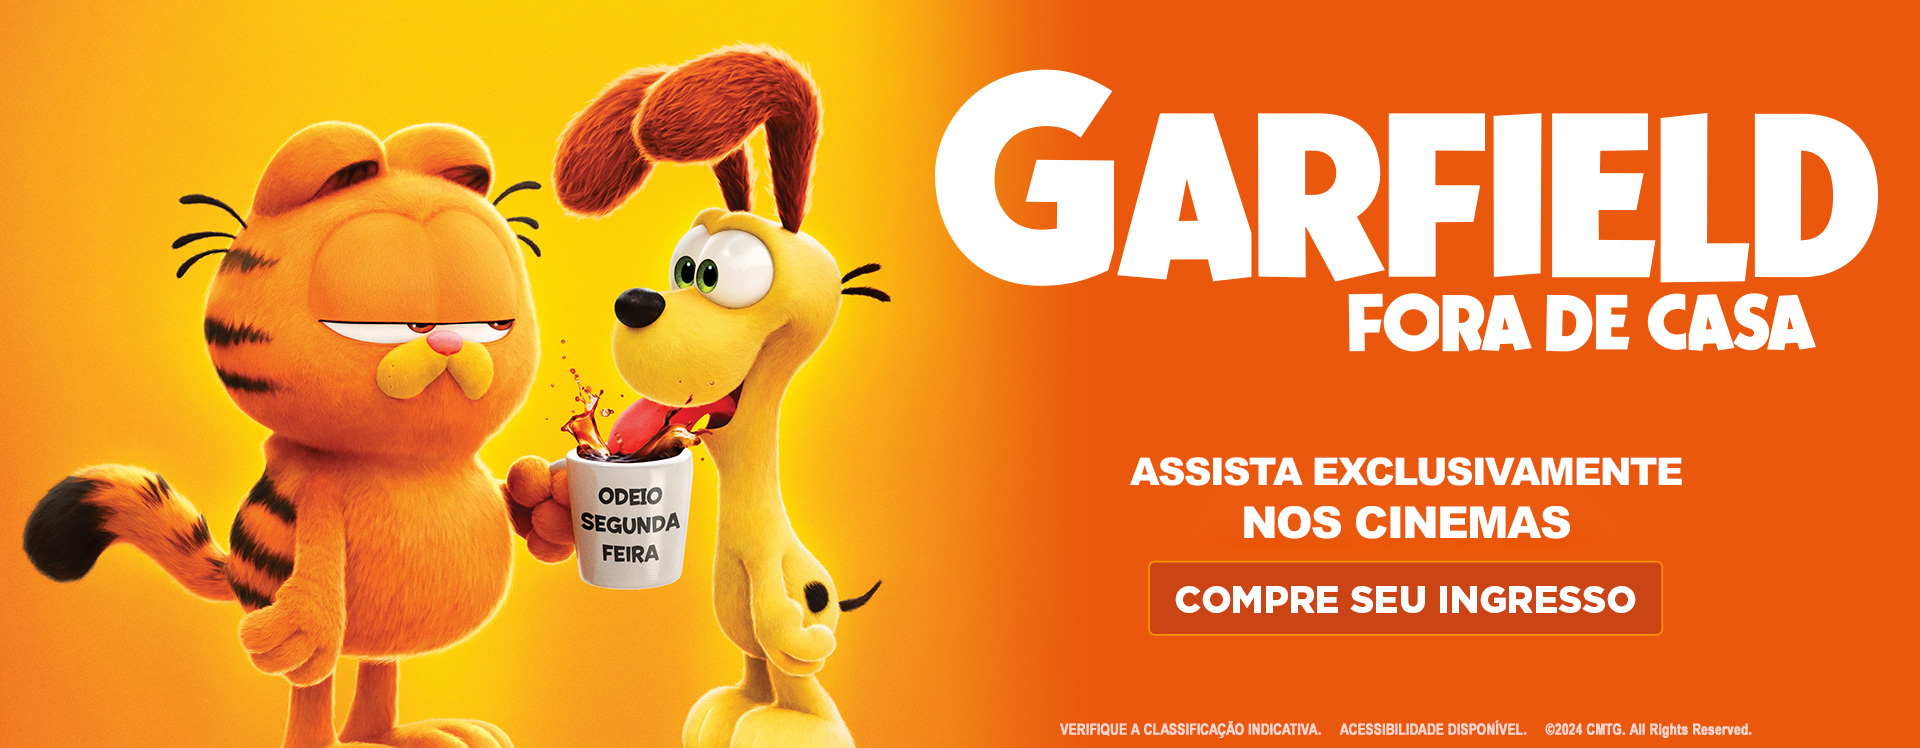 Garfield - Fora